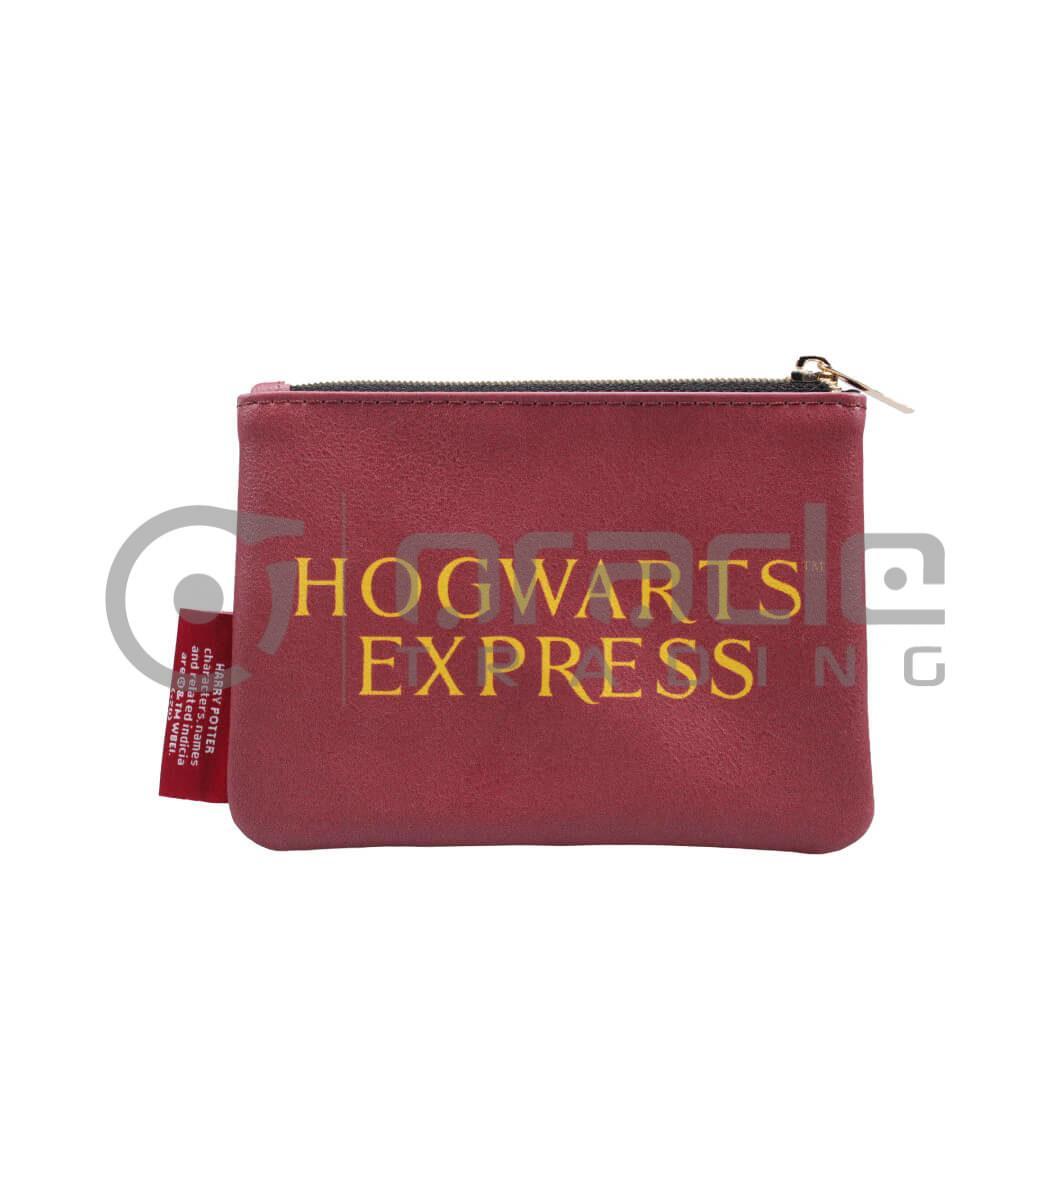 harry potter purse small hogwars express hpx029 b